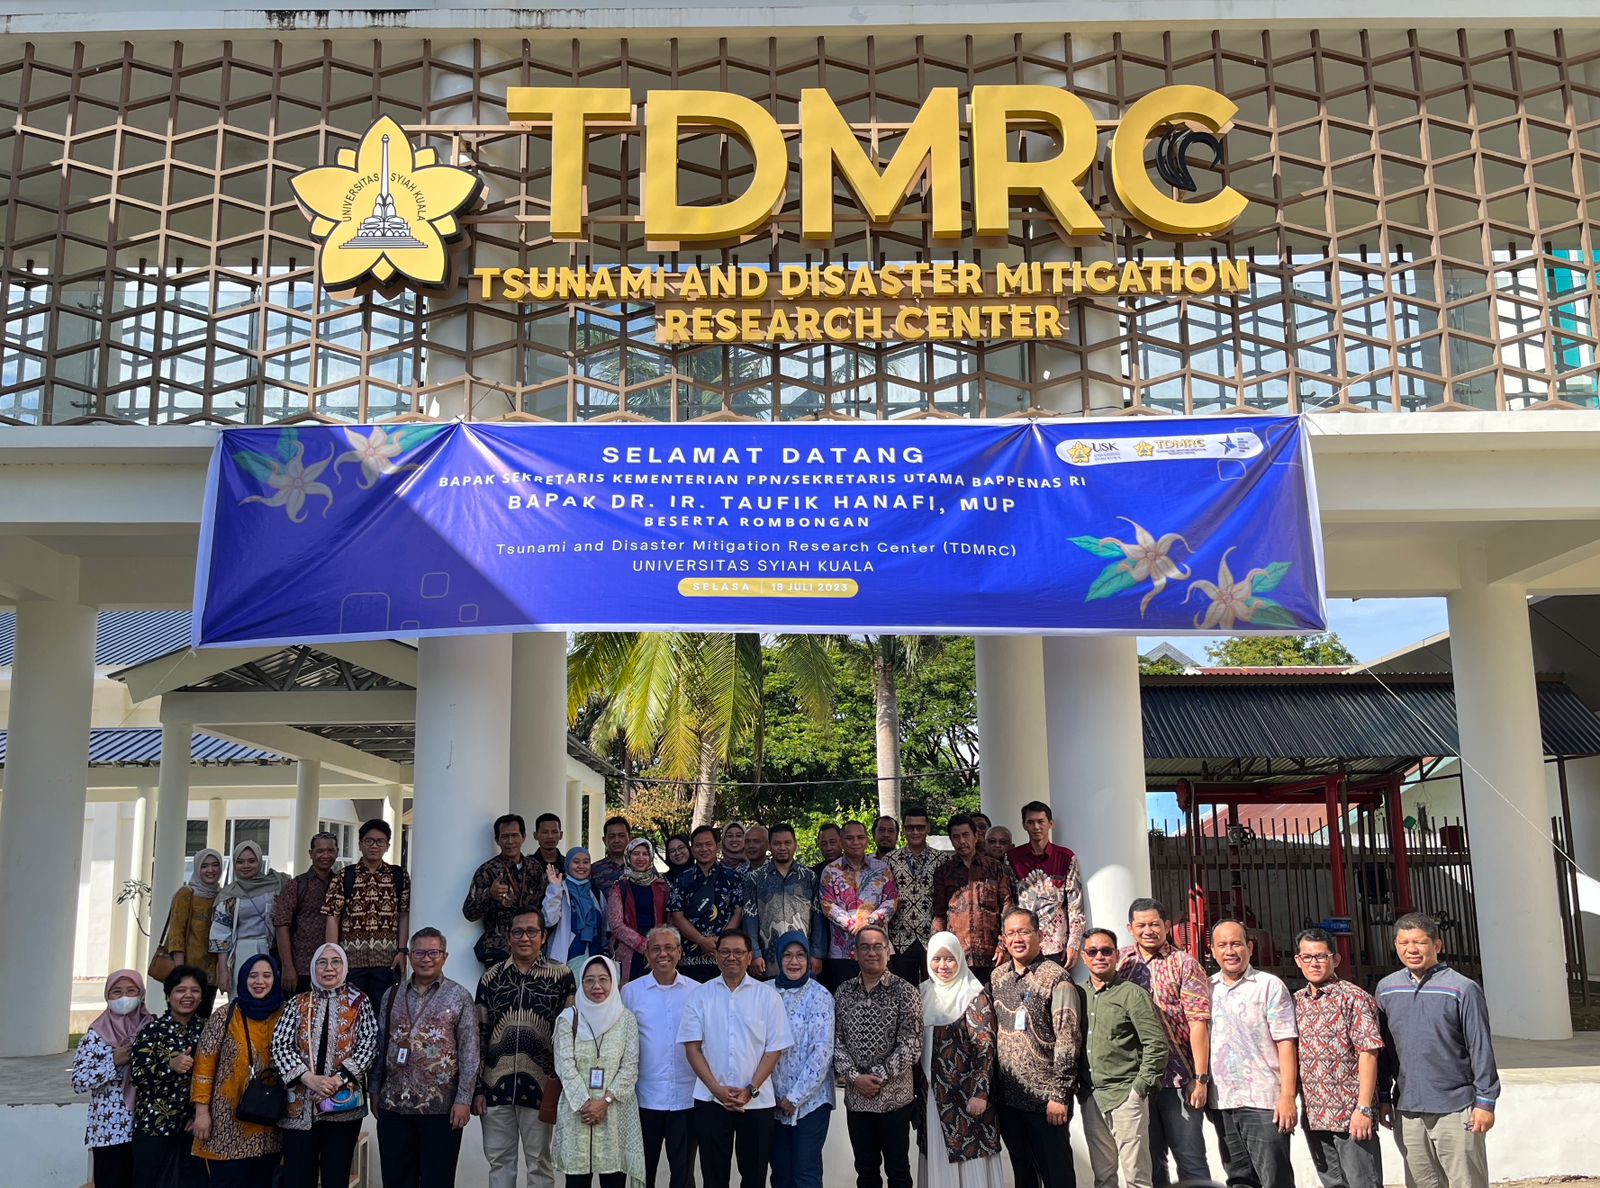 SESTAMA BAPPENAS RI Mr. Dr. Ir. Taufik Hanafi, MUP and His Entourage Visited TDMRC